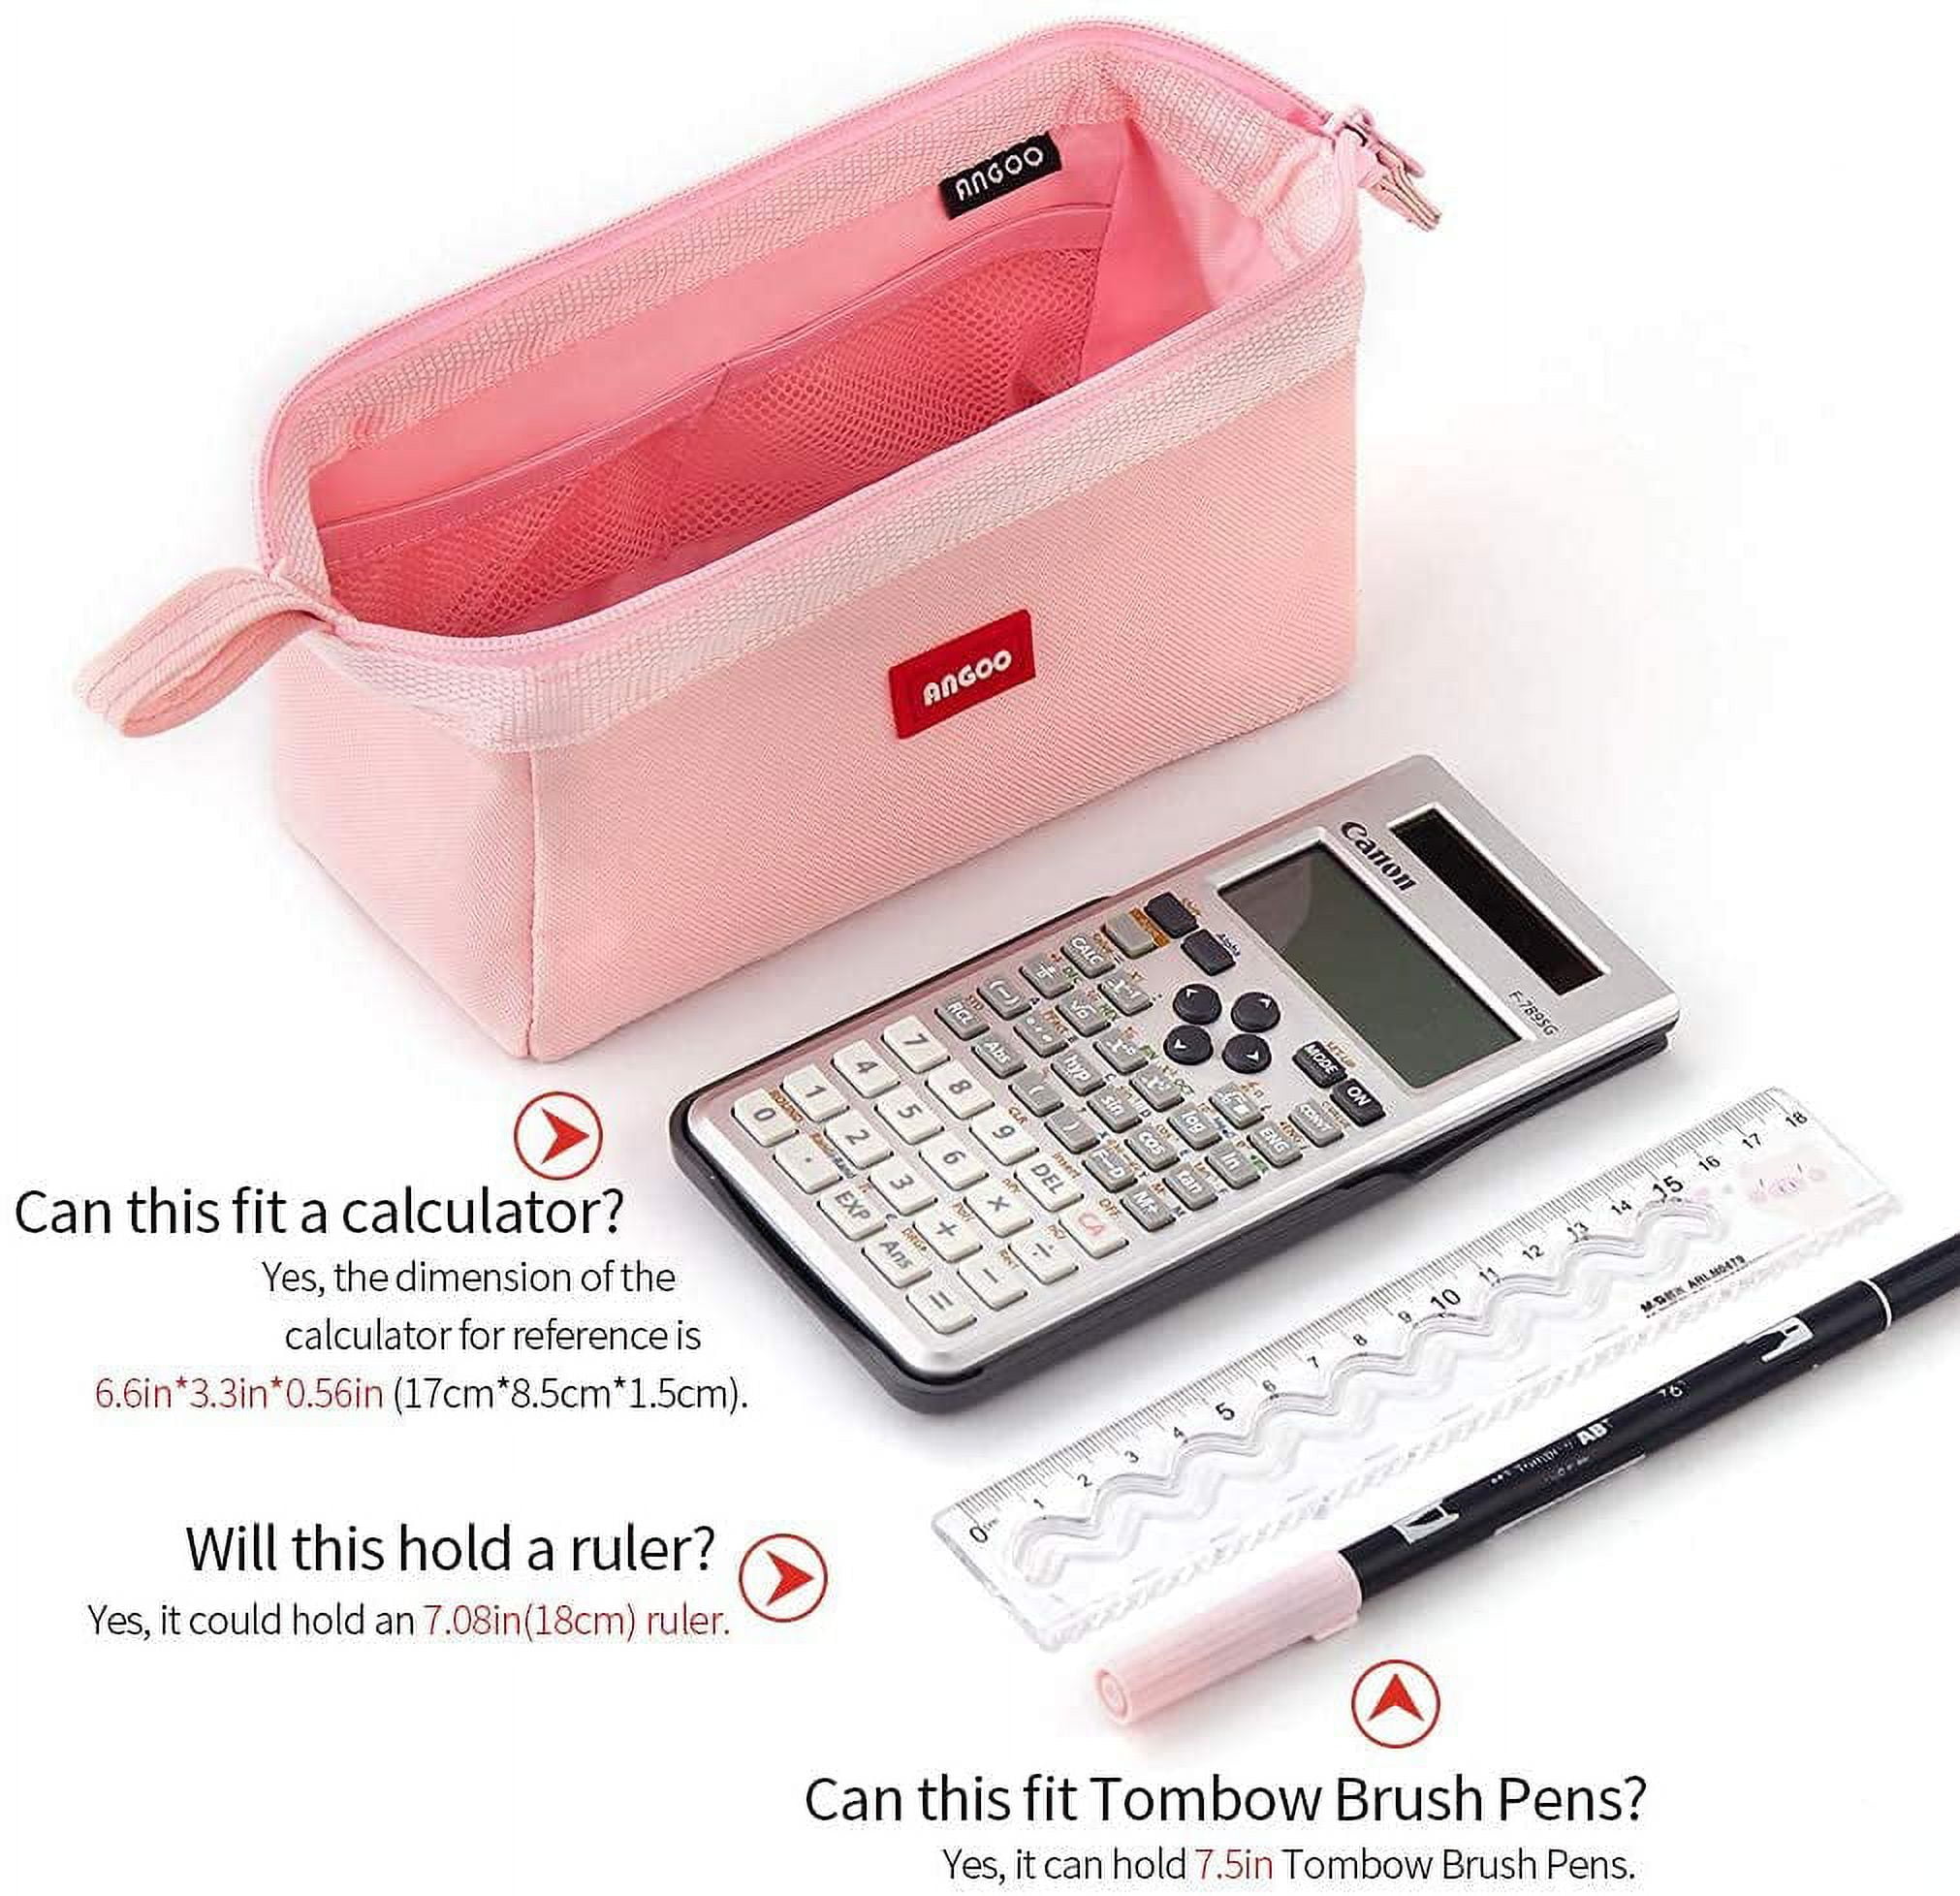 Pompotops Large Pencil Case, Transparent Large Capacity Visible Pencil Case, Minimalist Student Stationery Bag, Pink